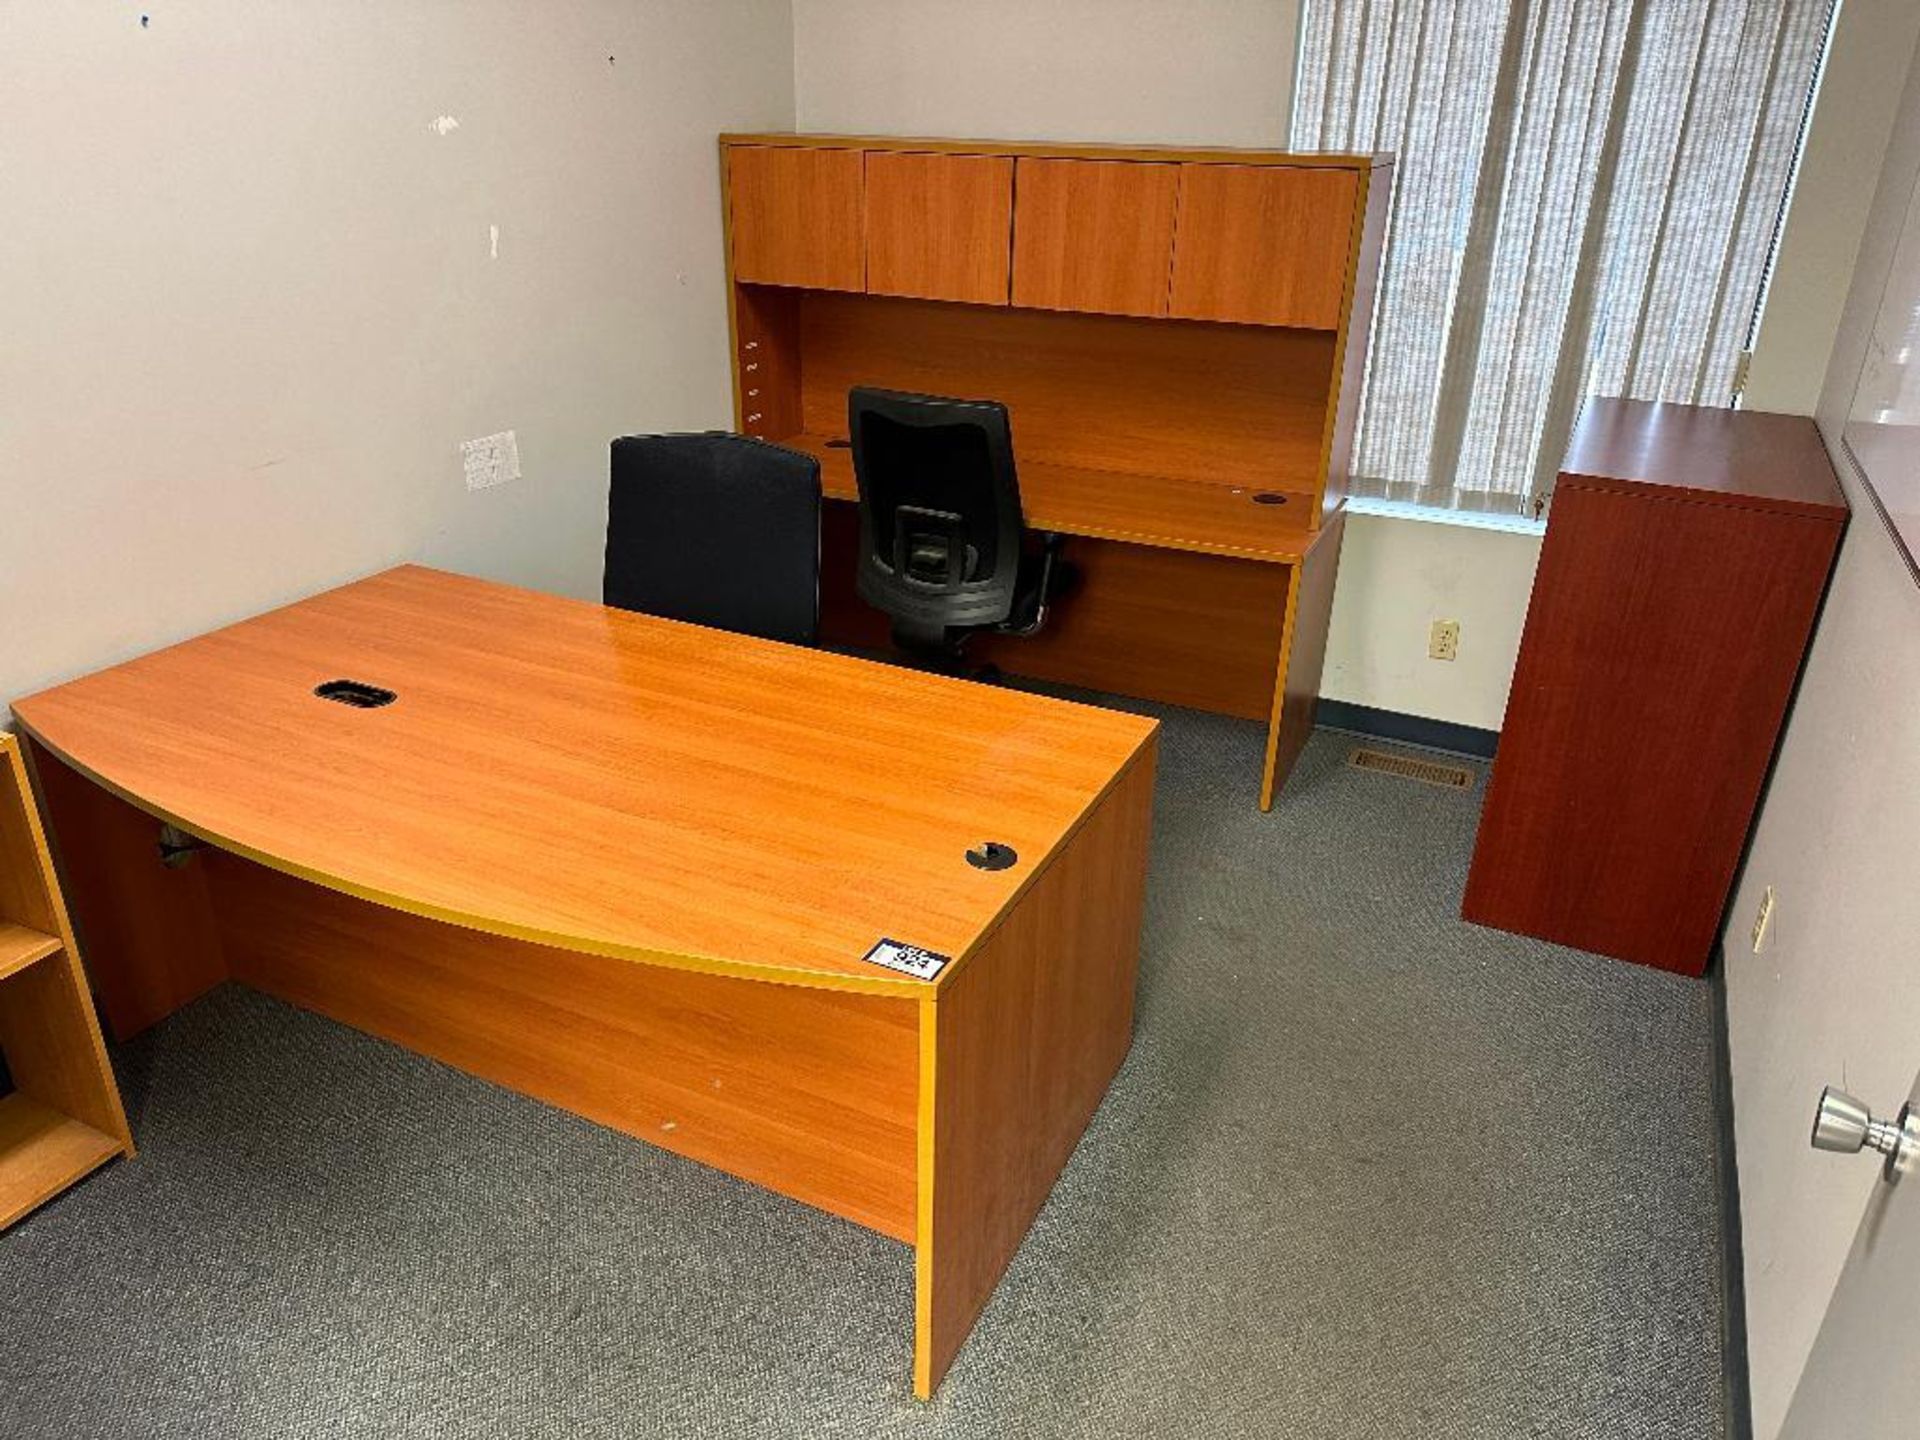 Contents of Office including (2) Asst. Desks, (1) Task Chair, (1) 3-Drawer Filing Cabinet, etc. - Image 2 of 4